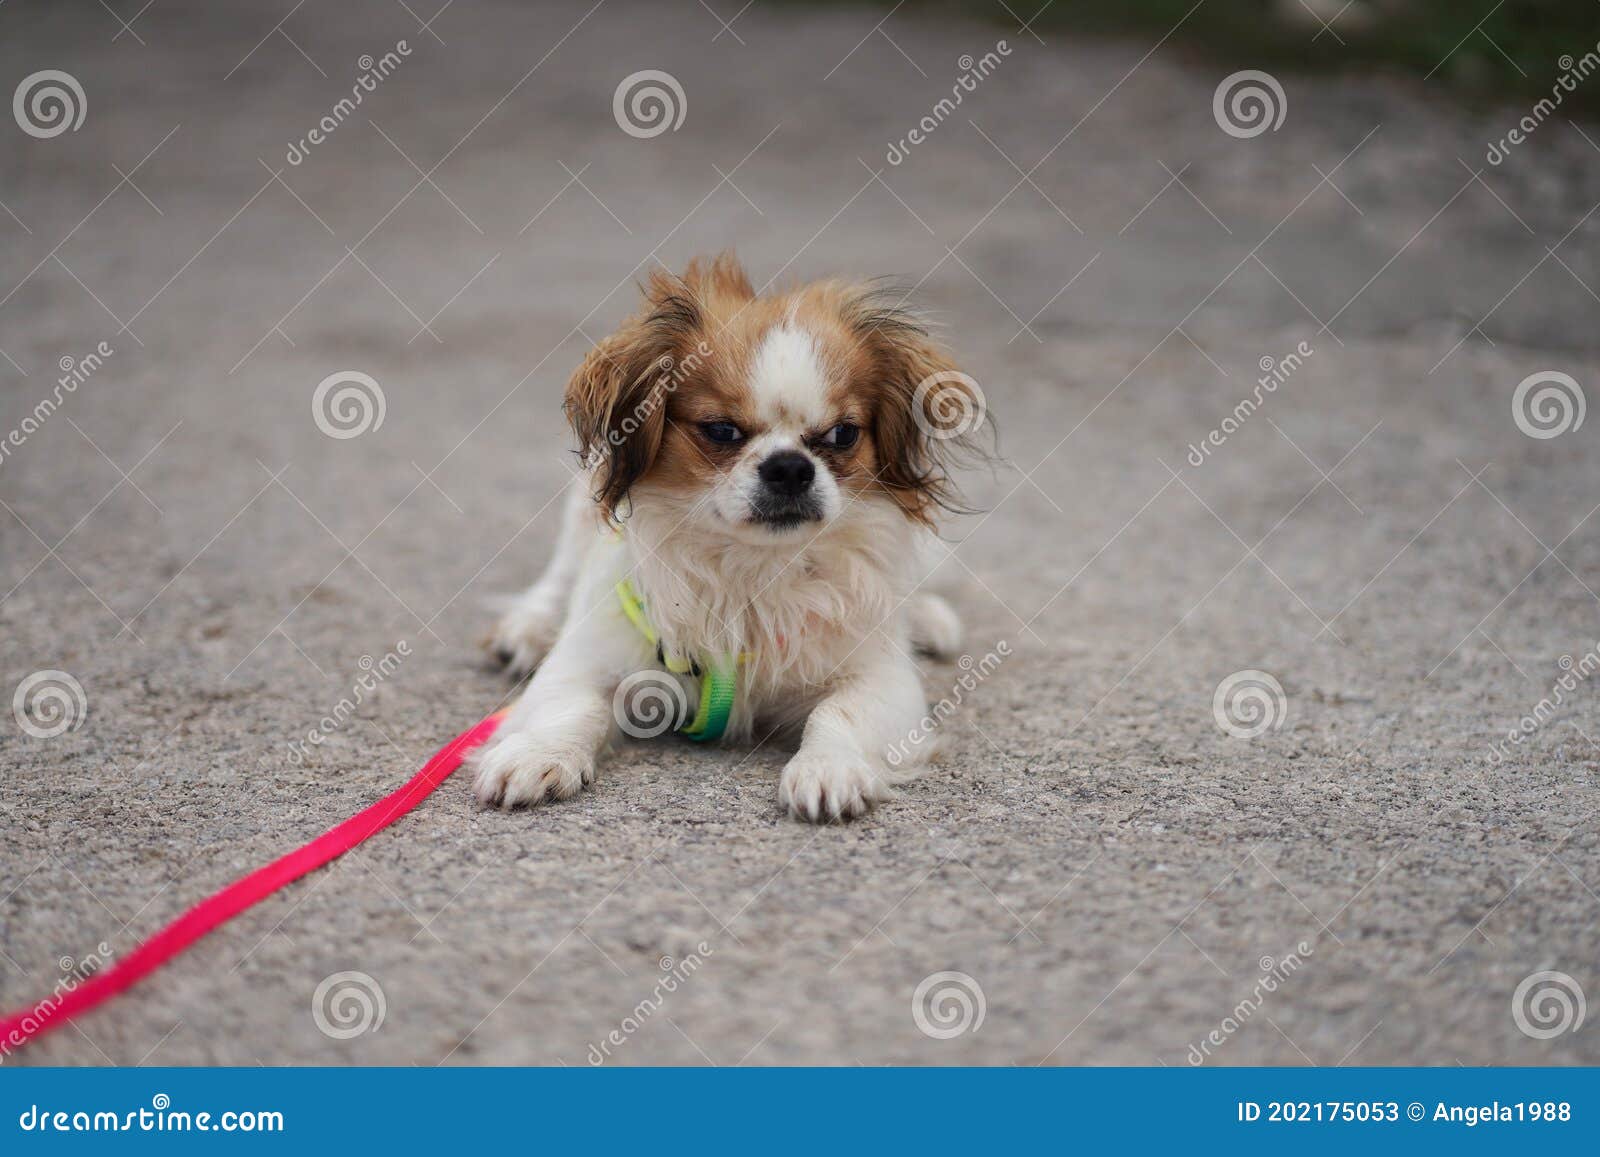 pekingese puppy